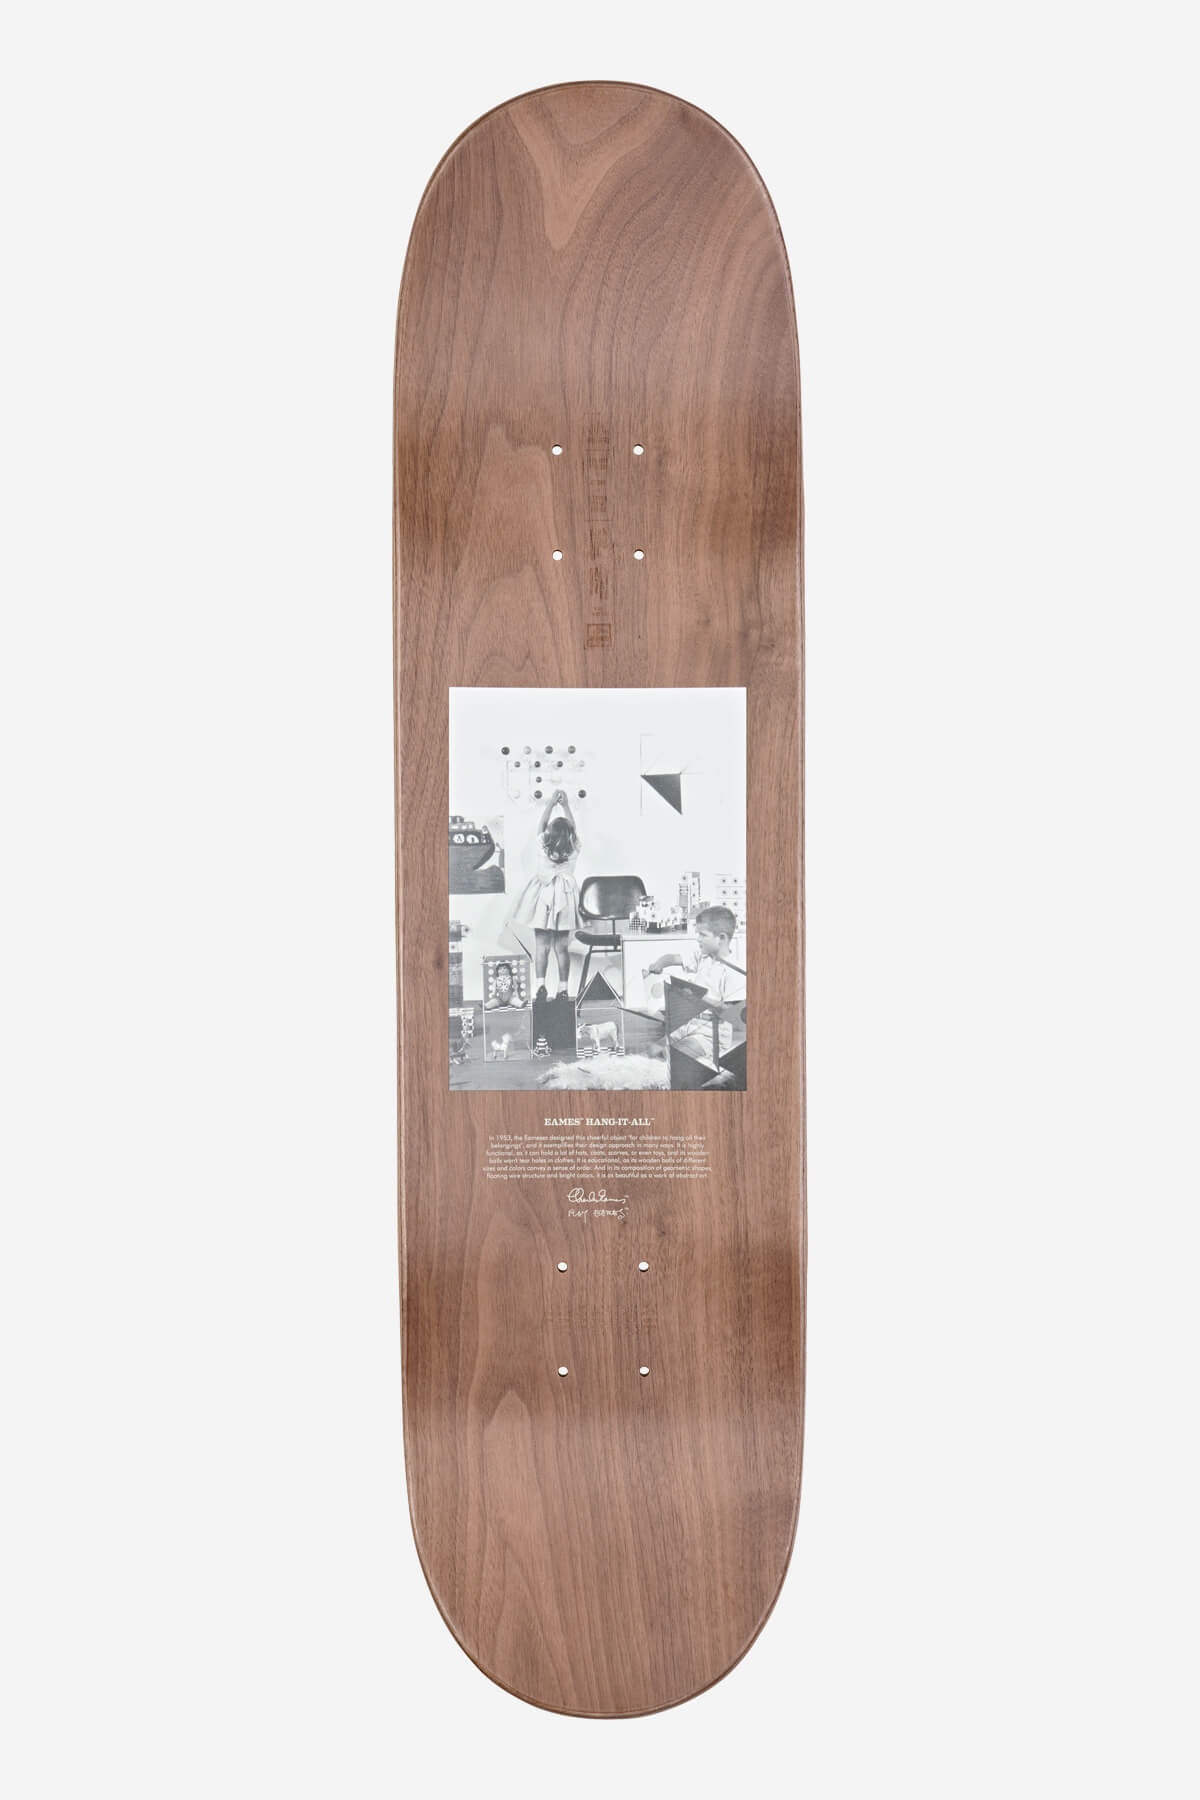 Globe - Silhouette Eames - Suspension - 8.25" Skateboard Deck